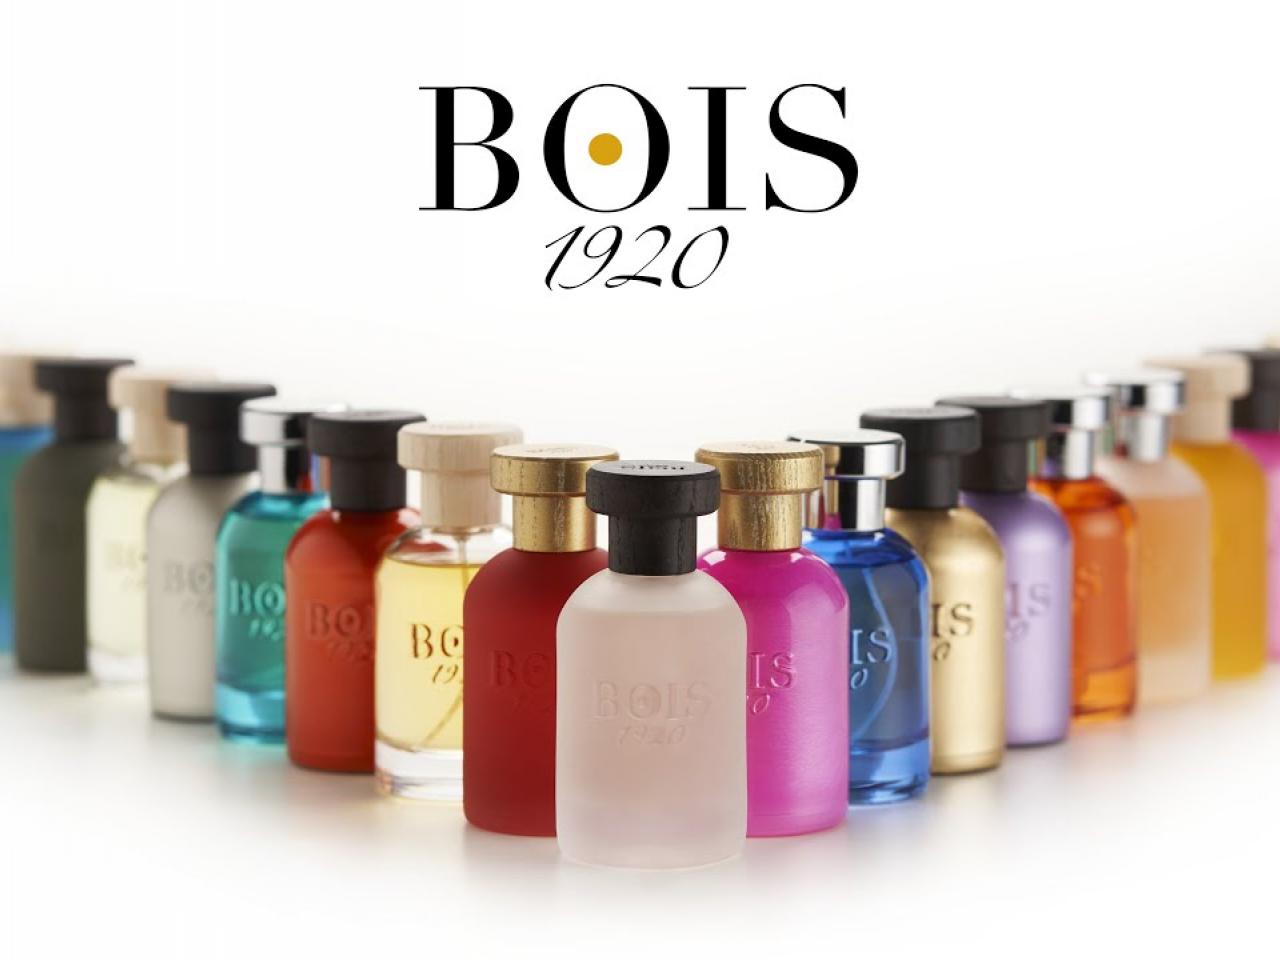 Bois1920 Silk Cosmetics